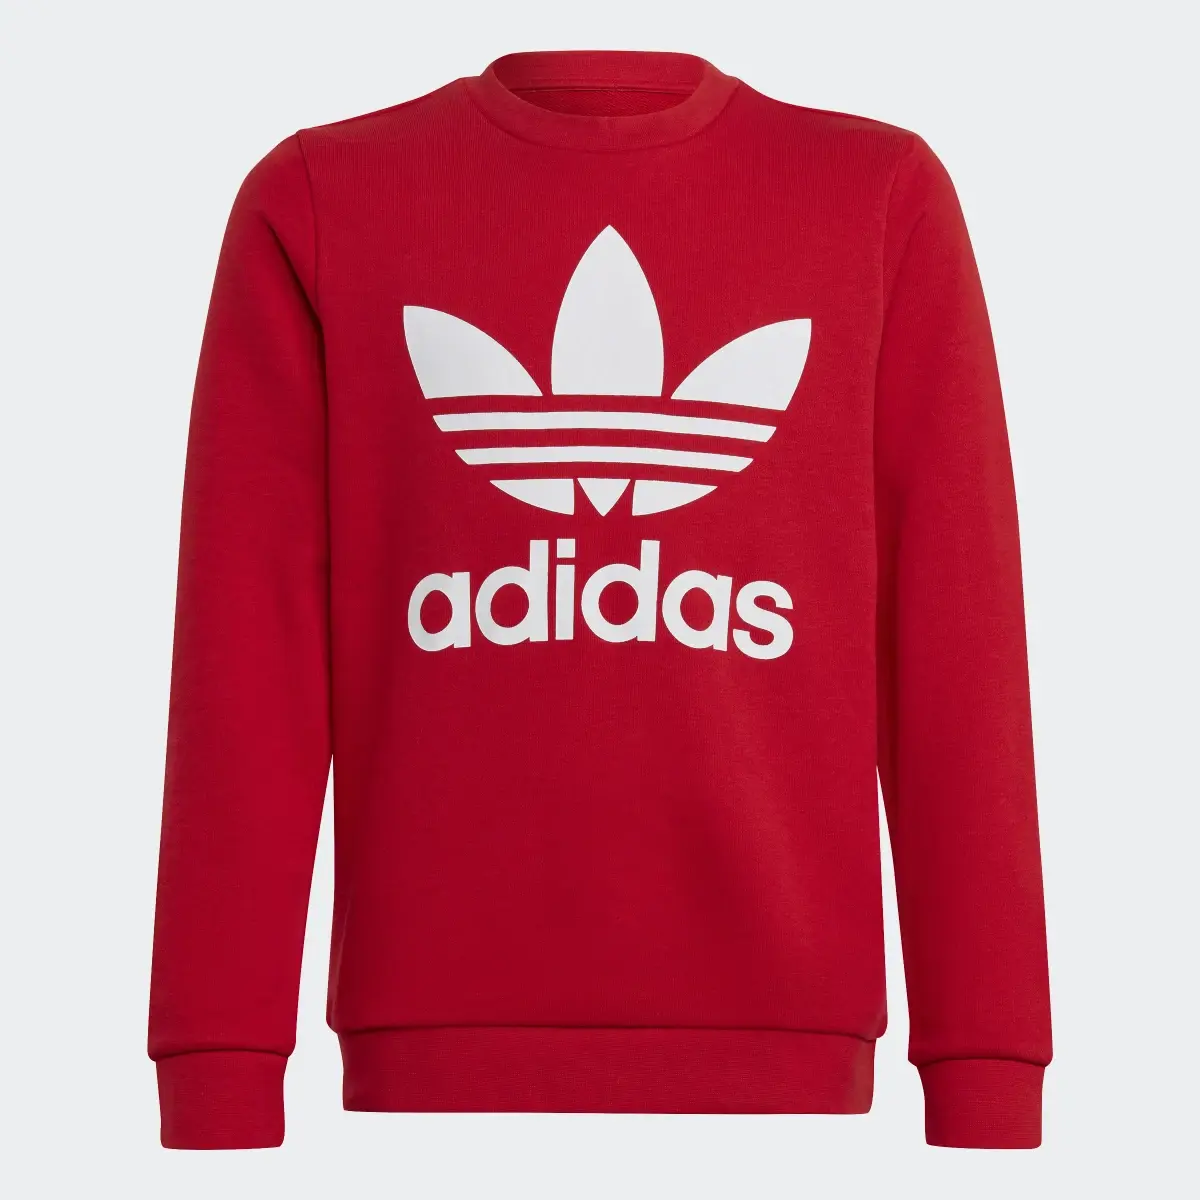 Adidas Trefoil Sweatshirt. 3